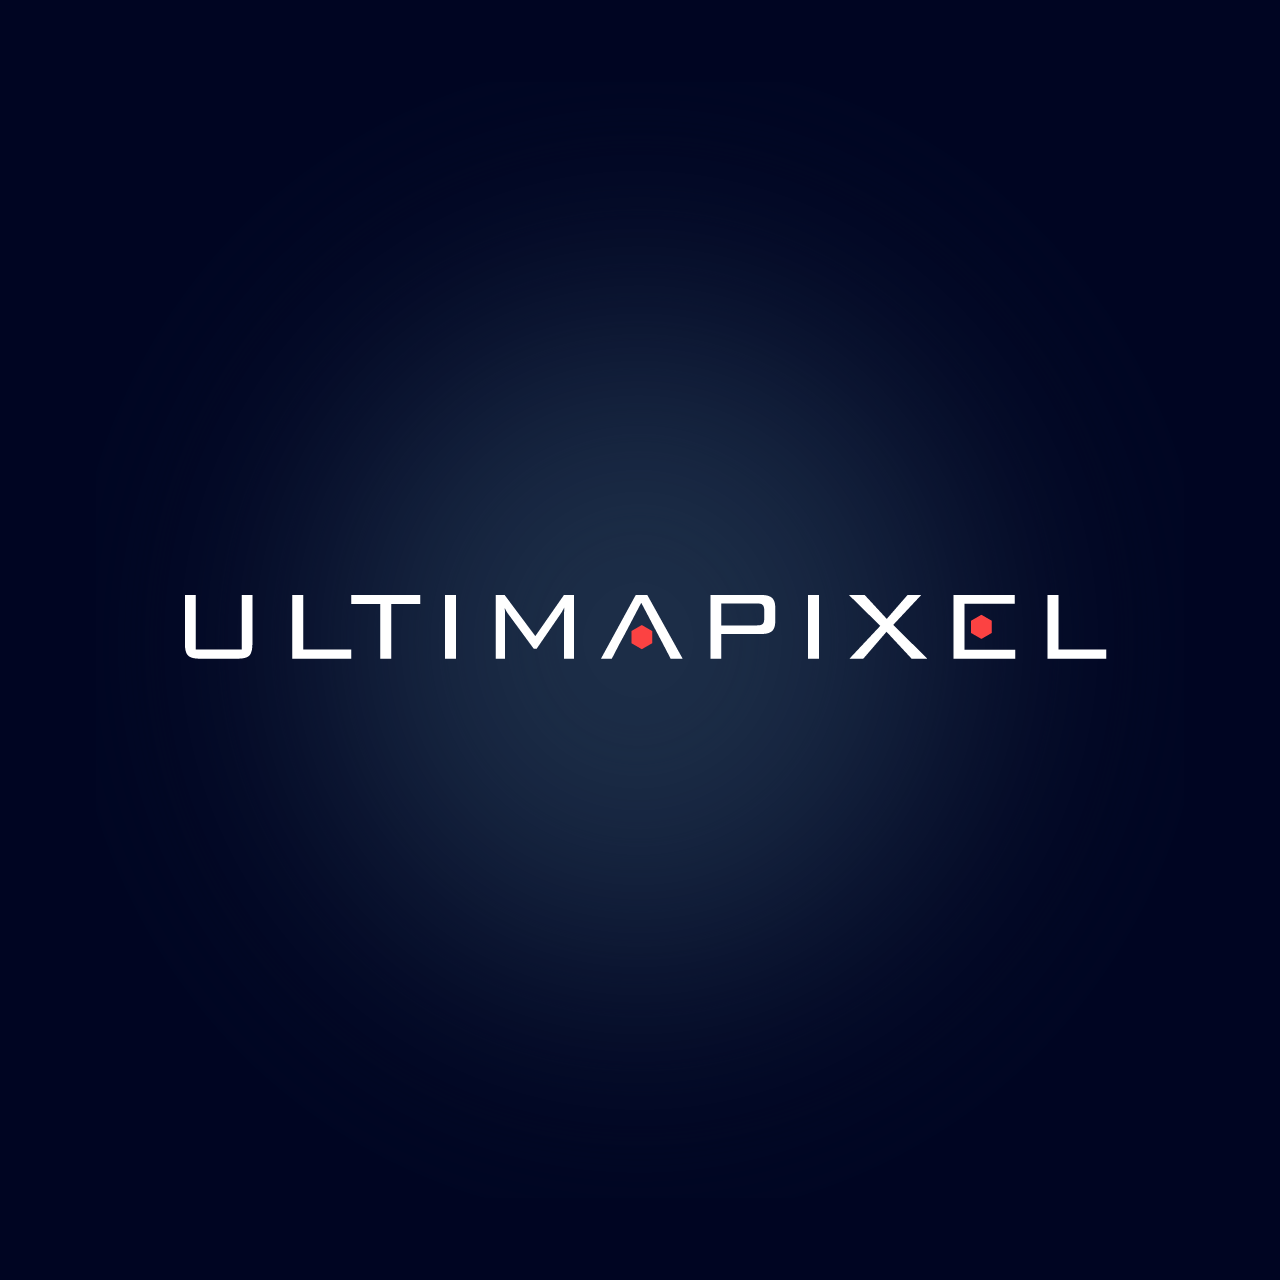 Ultimapixel Logo Design_ Option 1-01.png